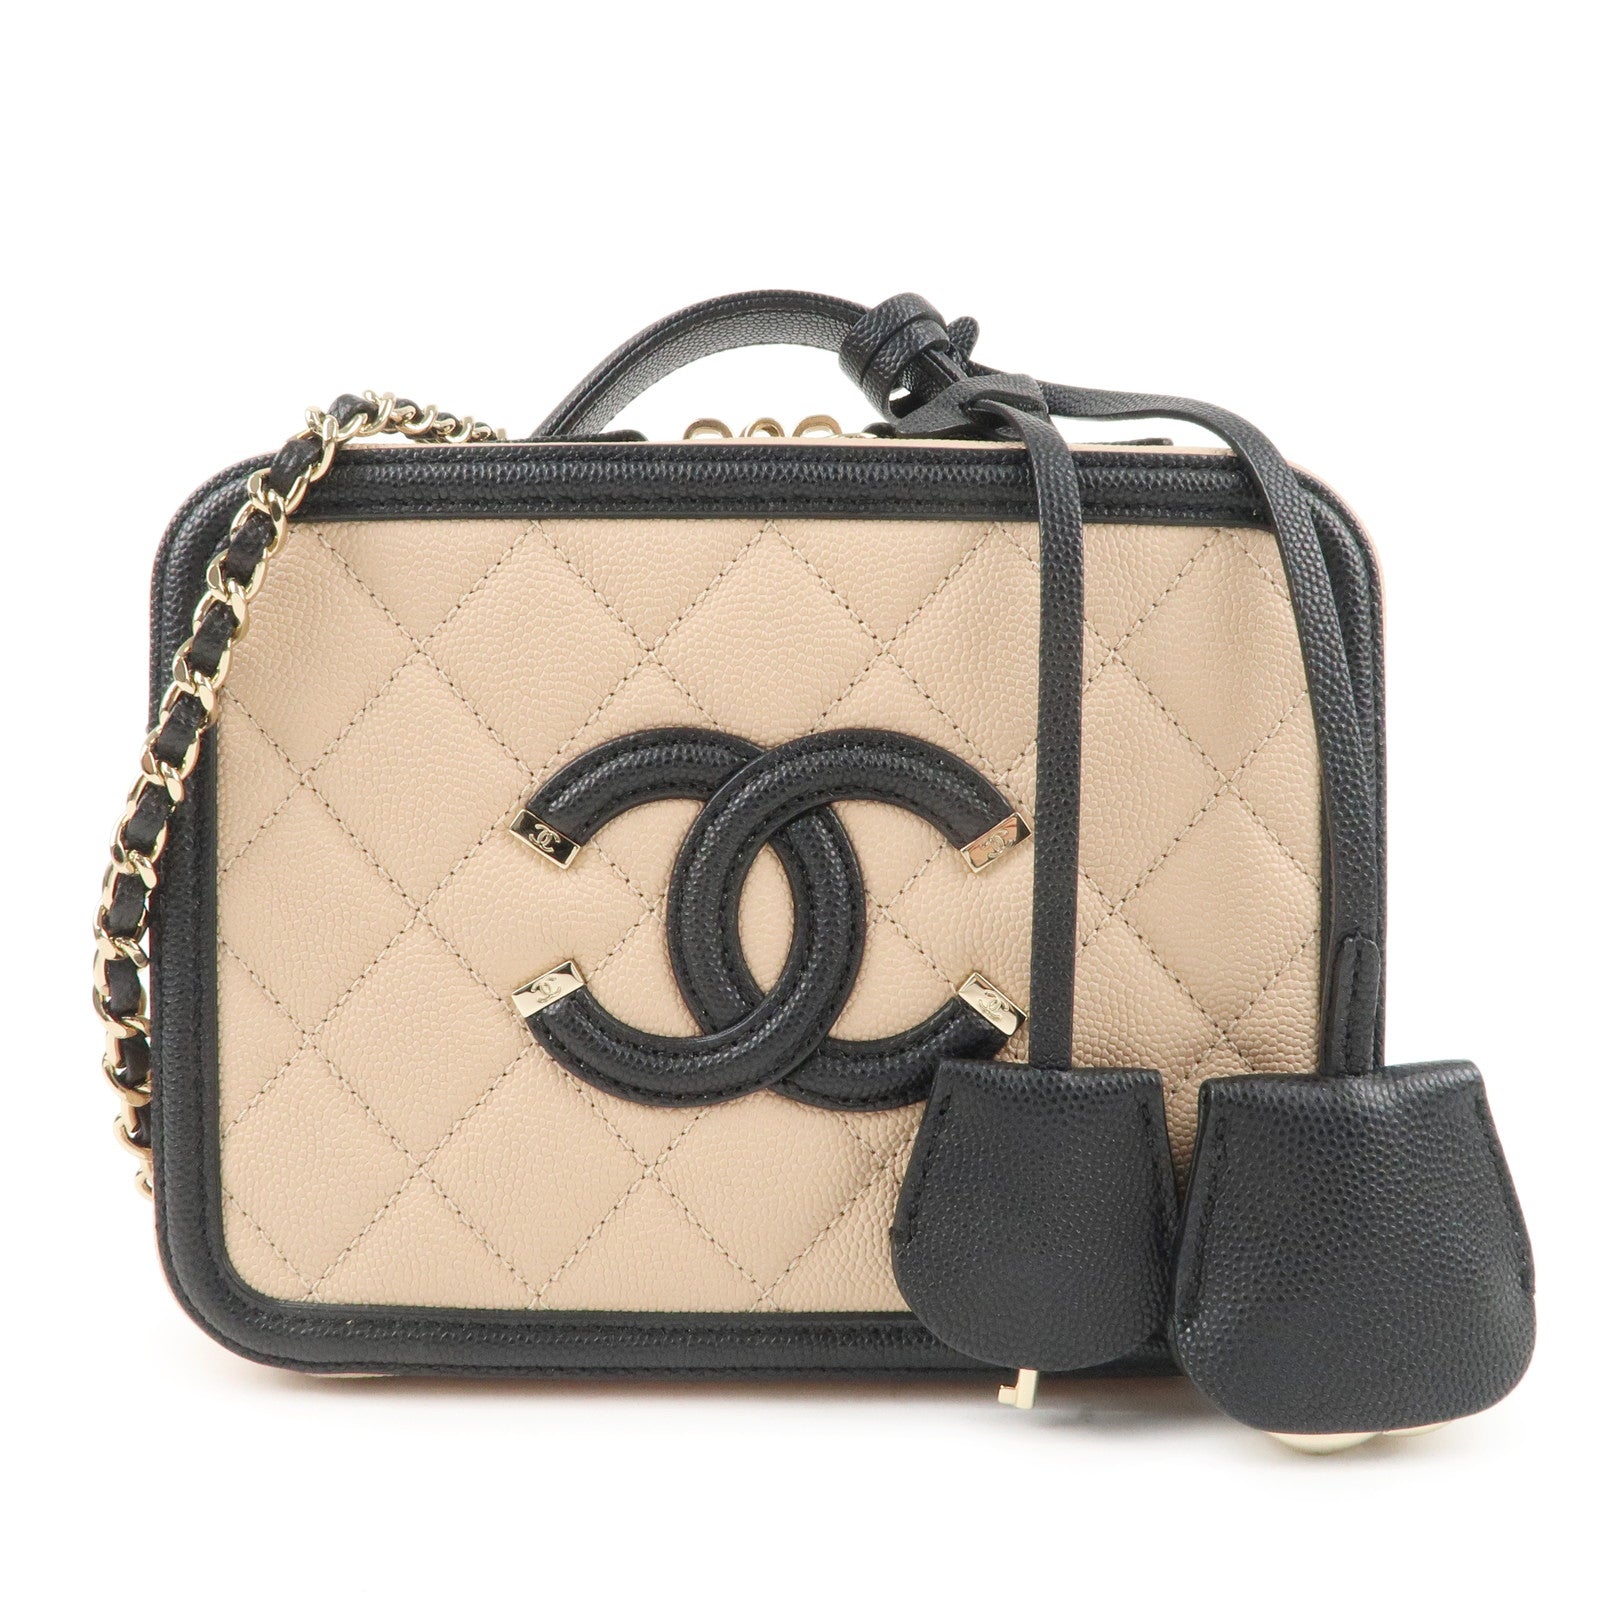 Replica Chanel CC Filigree Vanity Case Vanity Case A93343 Beige